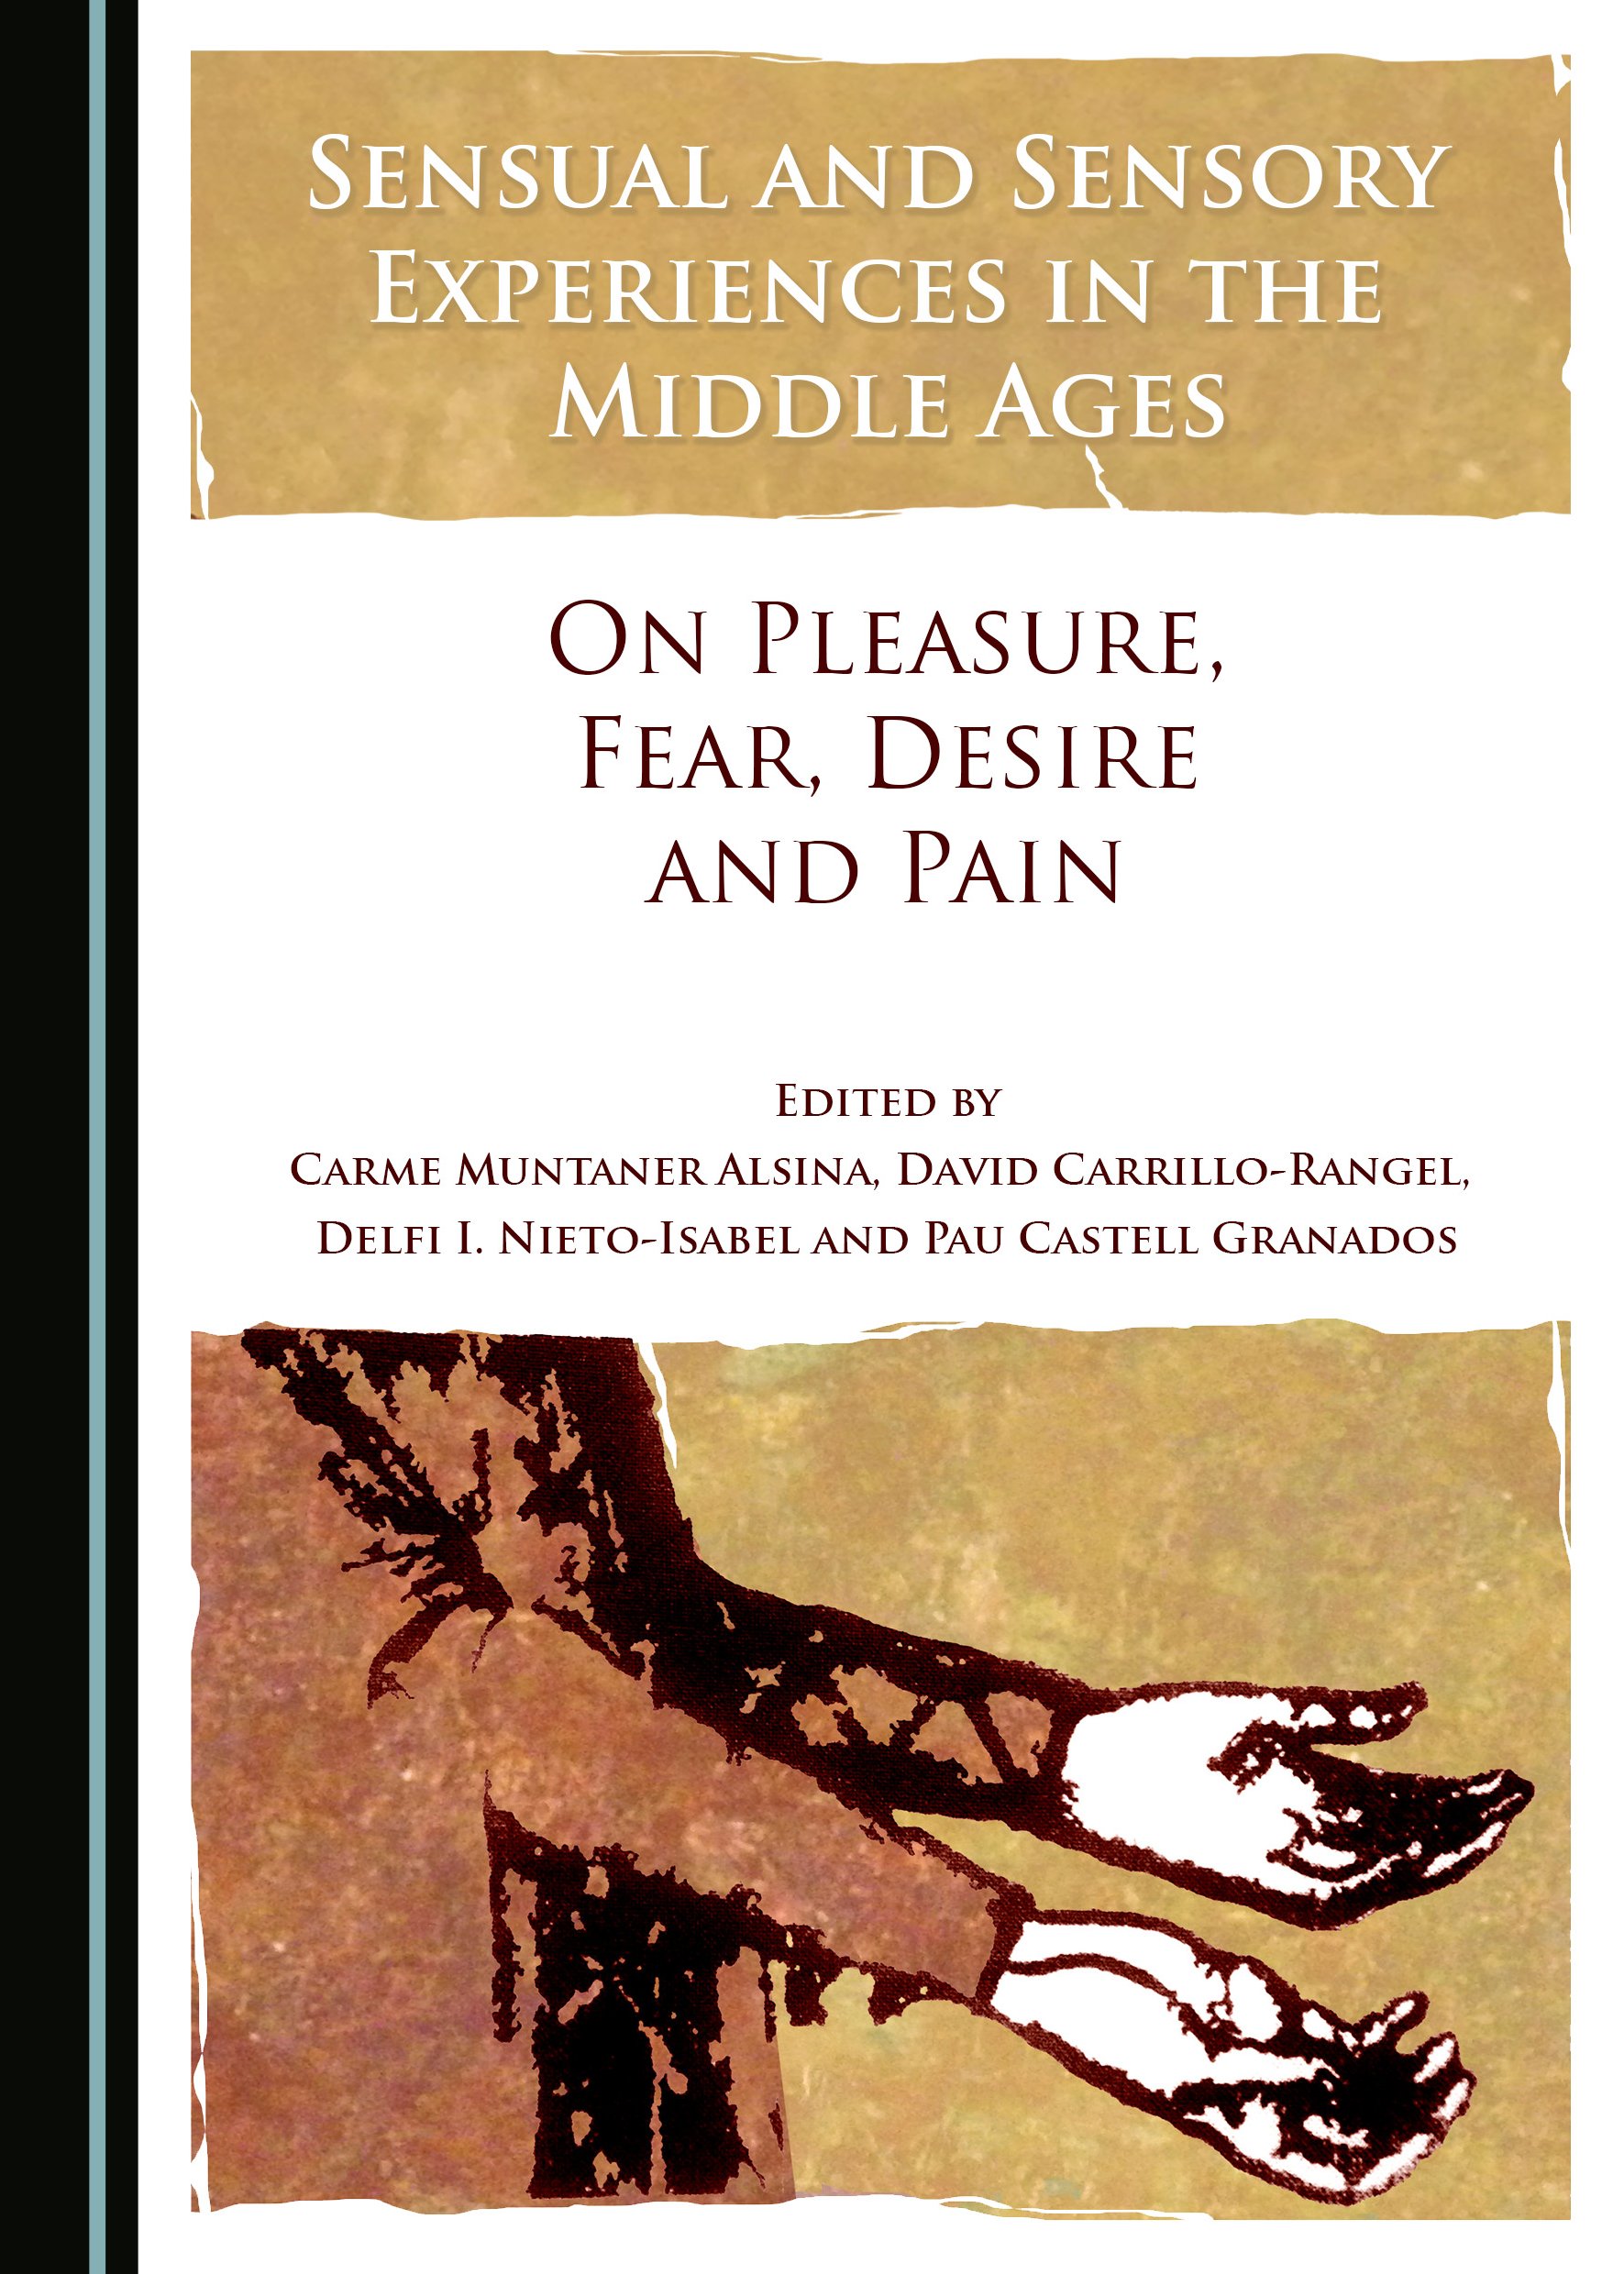 Imagen de portada del libro Sensual and Sensory Experiences in the Middle Ages